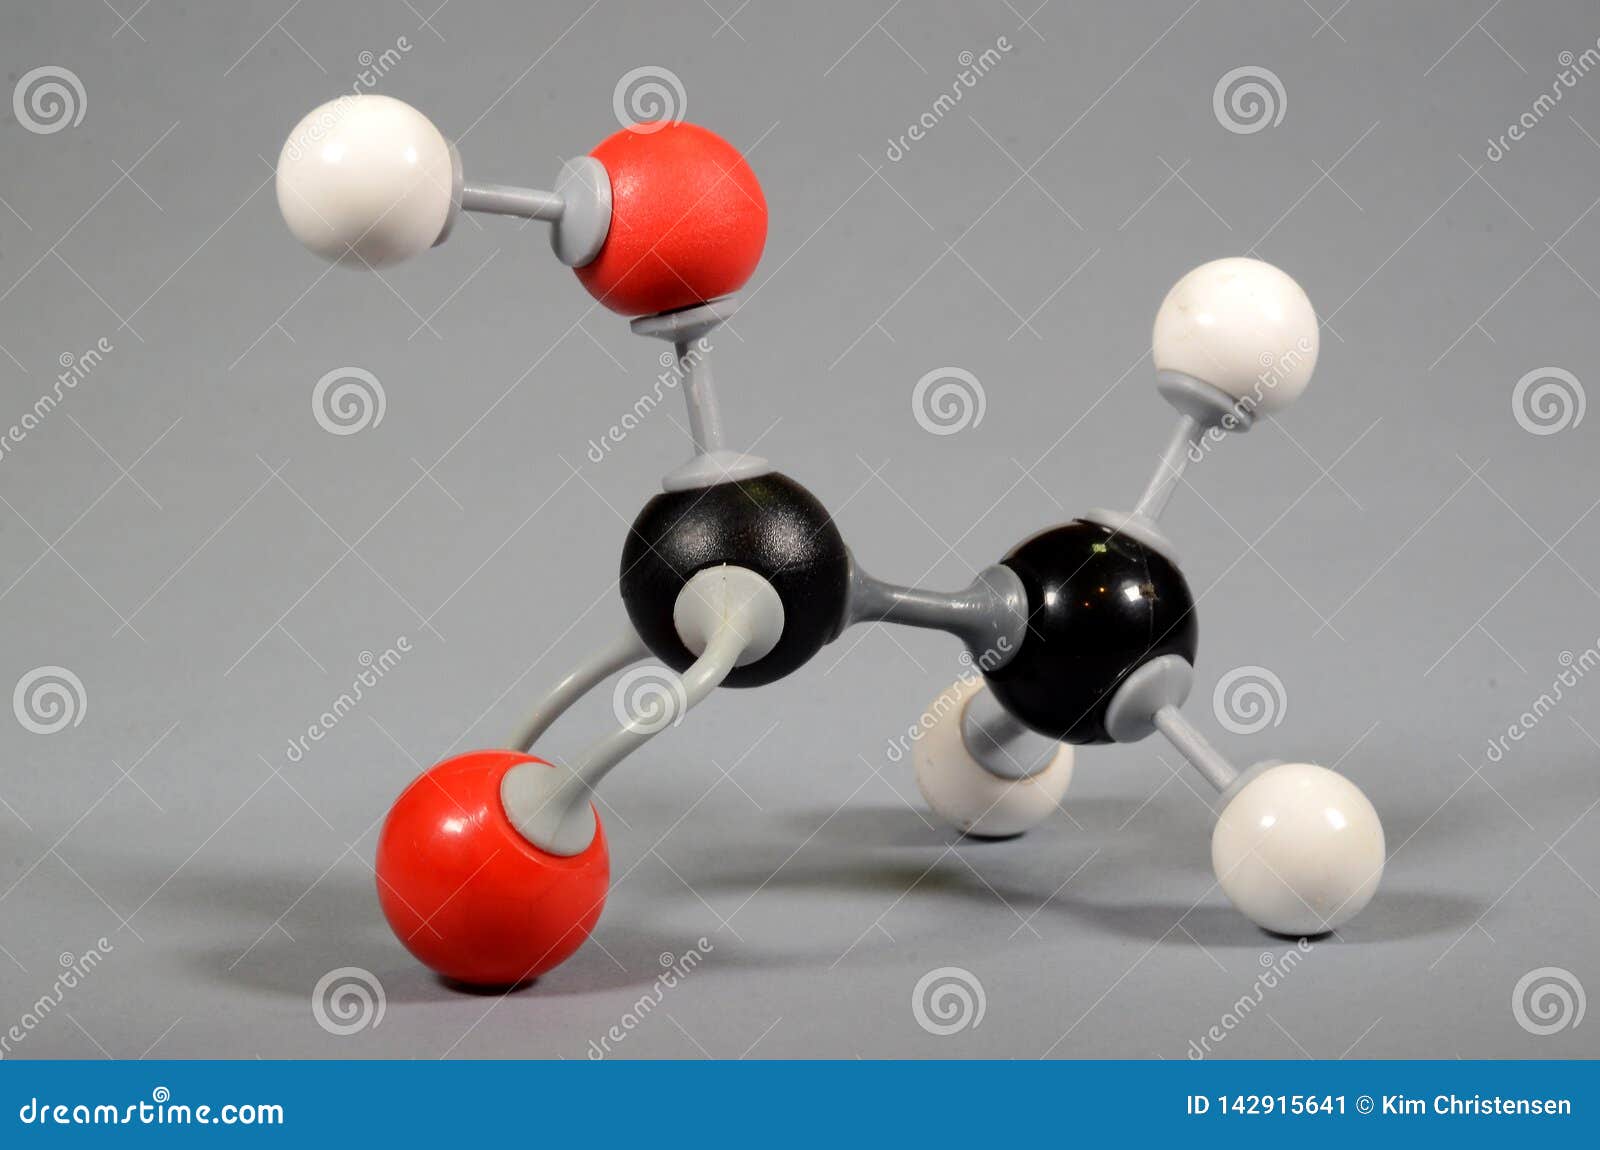 Уксусная кислота sio2. Уксусная кислота решетка. Уксусная кислота молекулярная или немолекулярная. Уксусная кислота и р2о5. Уксусная кислота черная картинка.